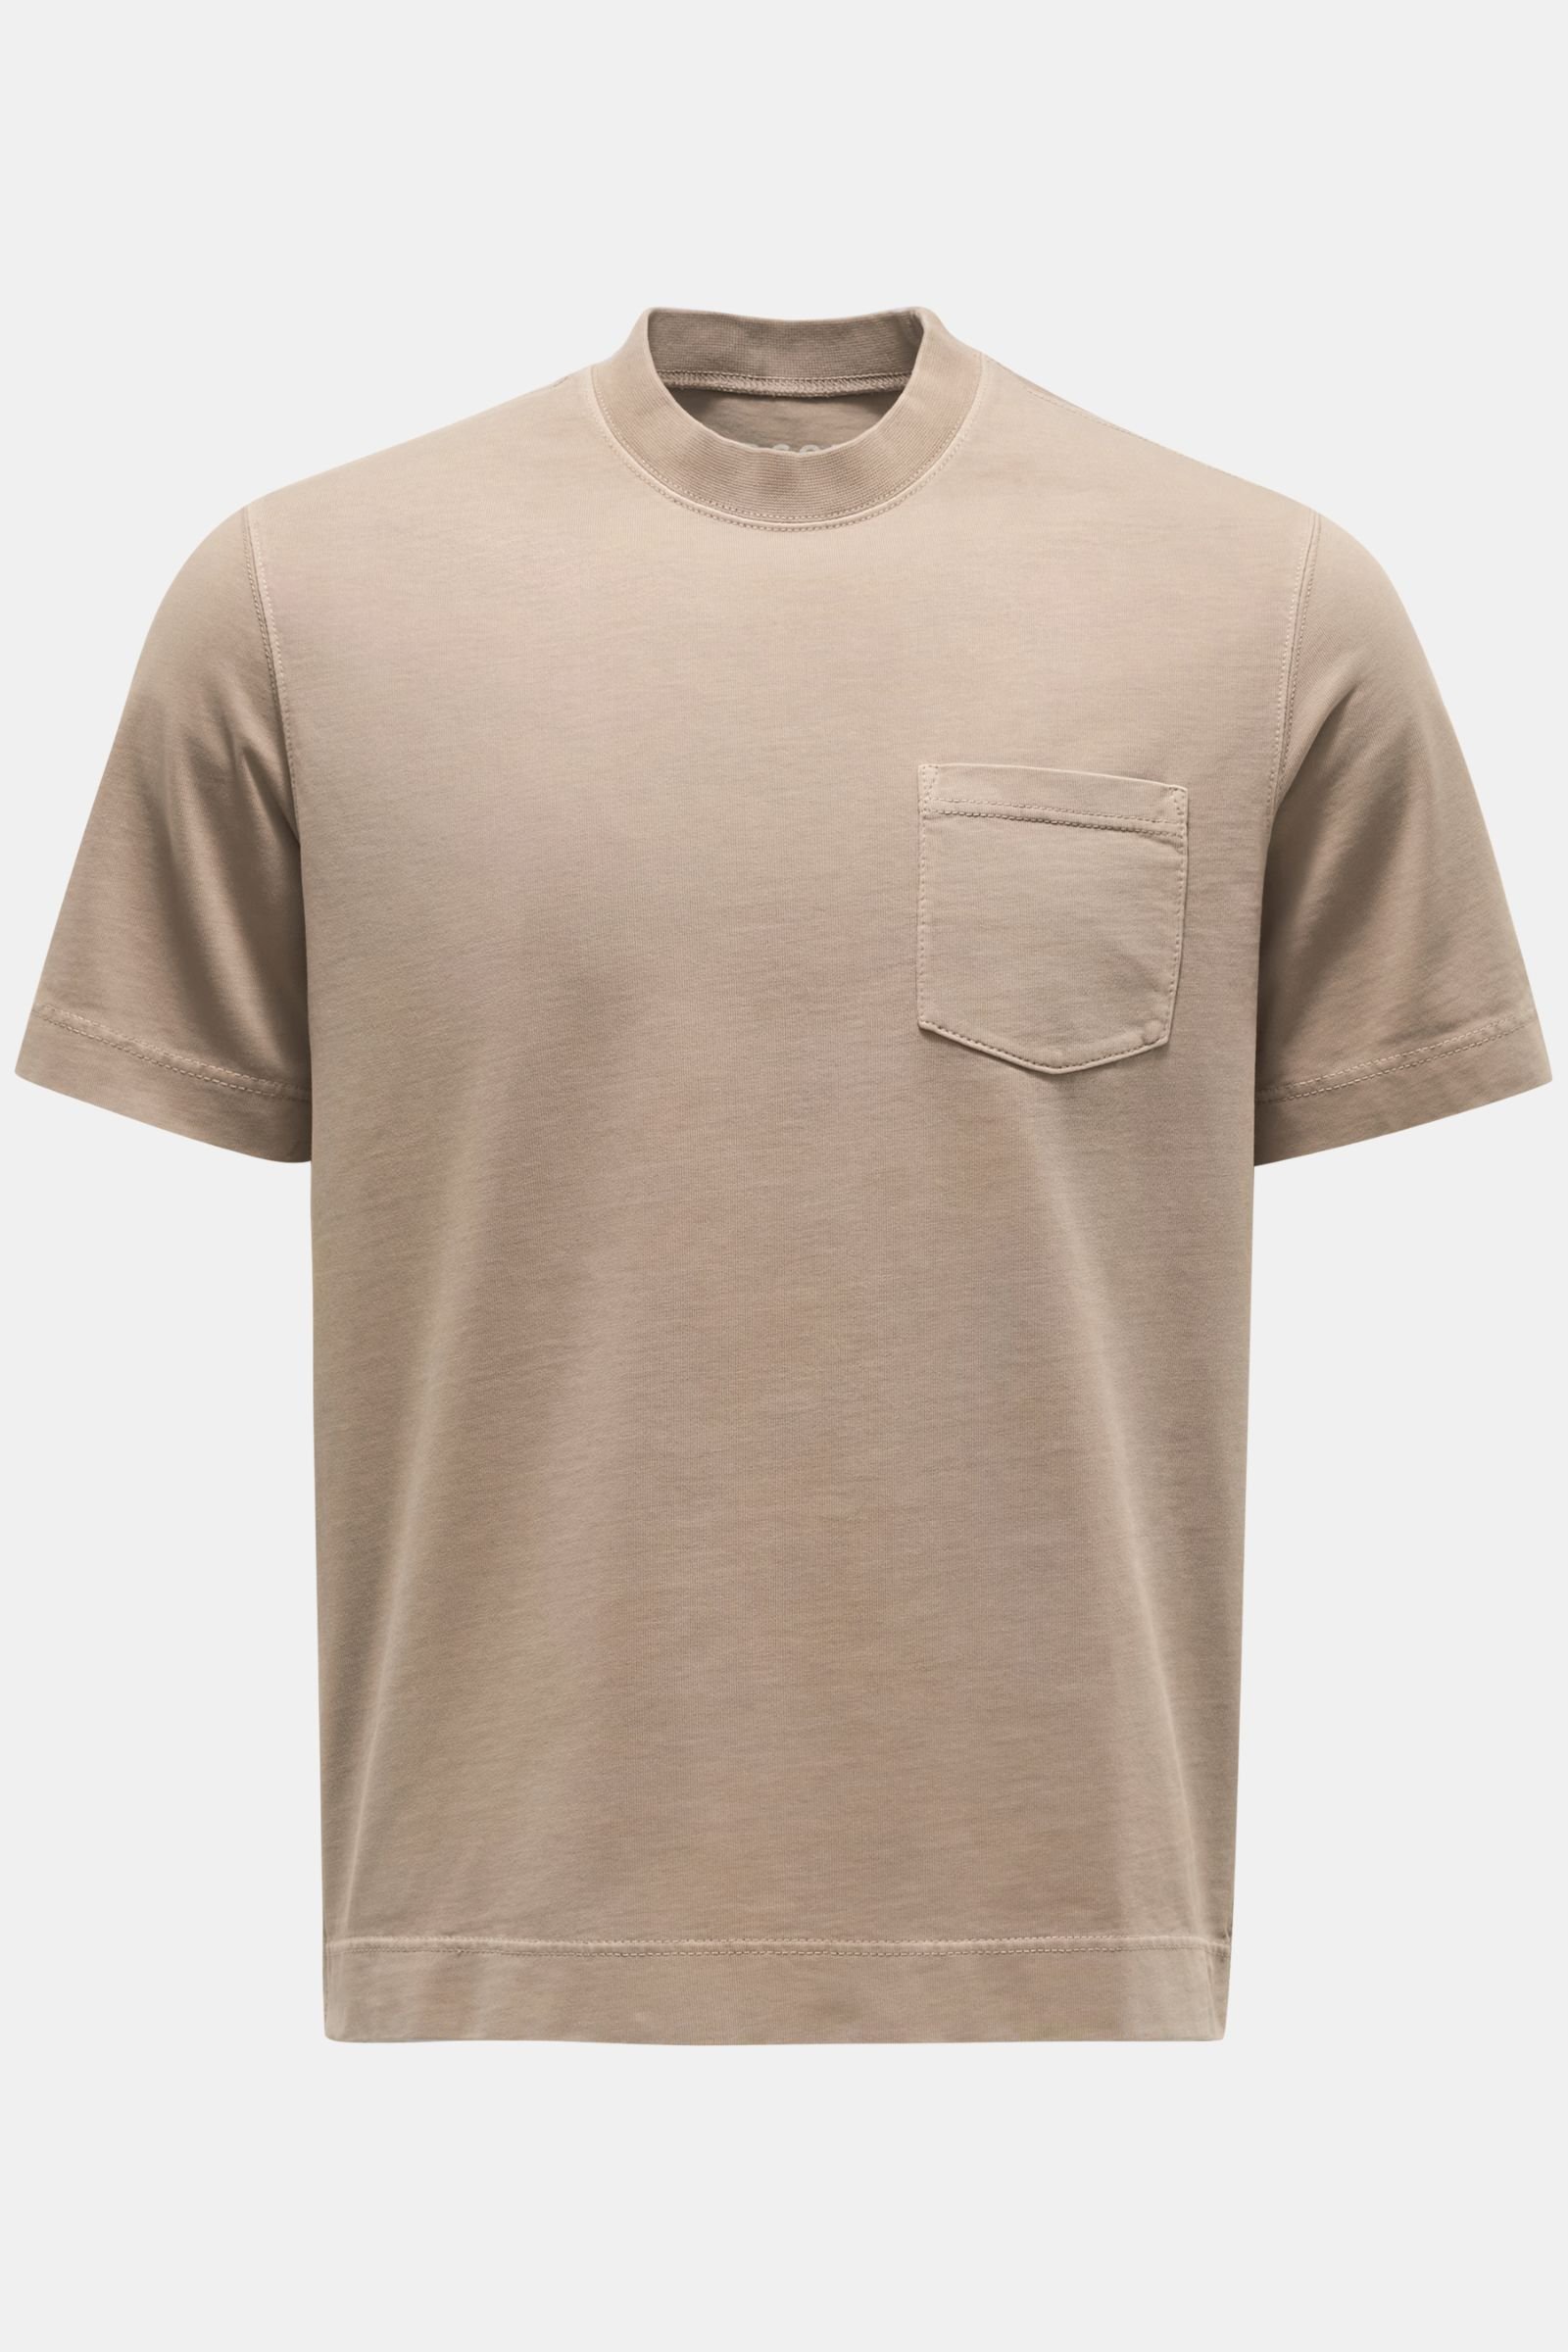 Rundhals-T-Shirt graubraun